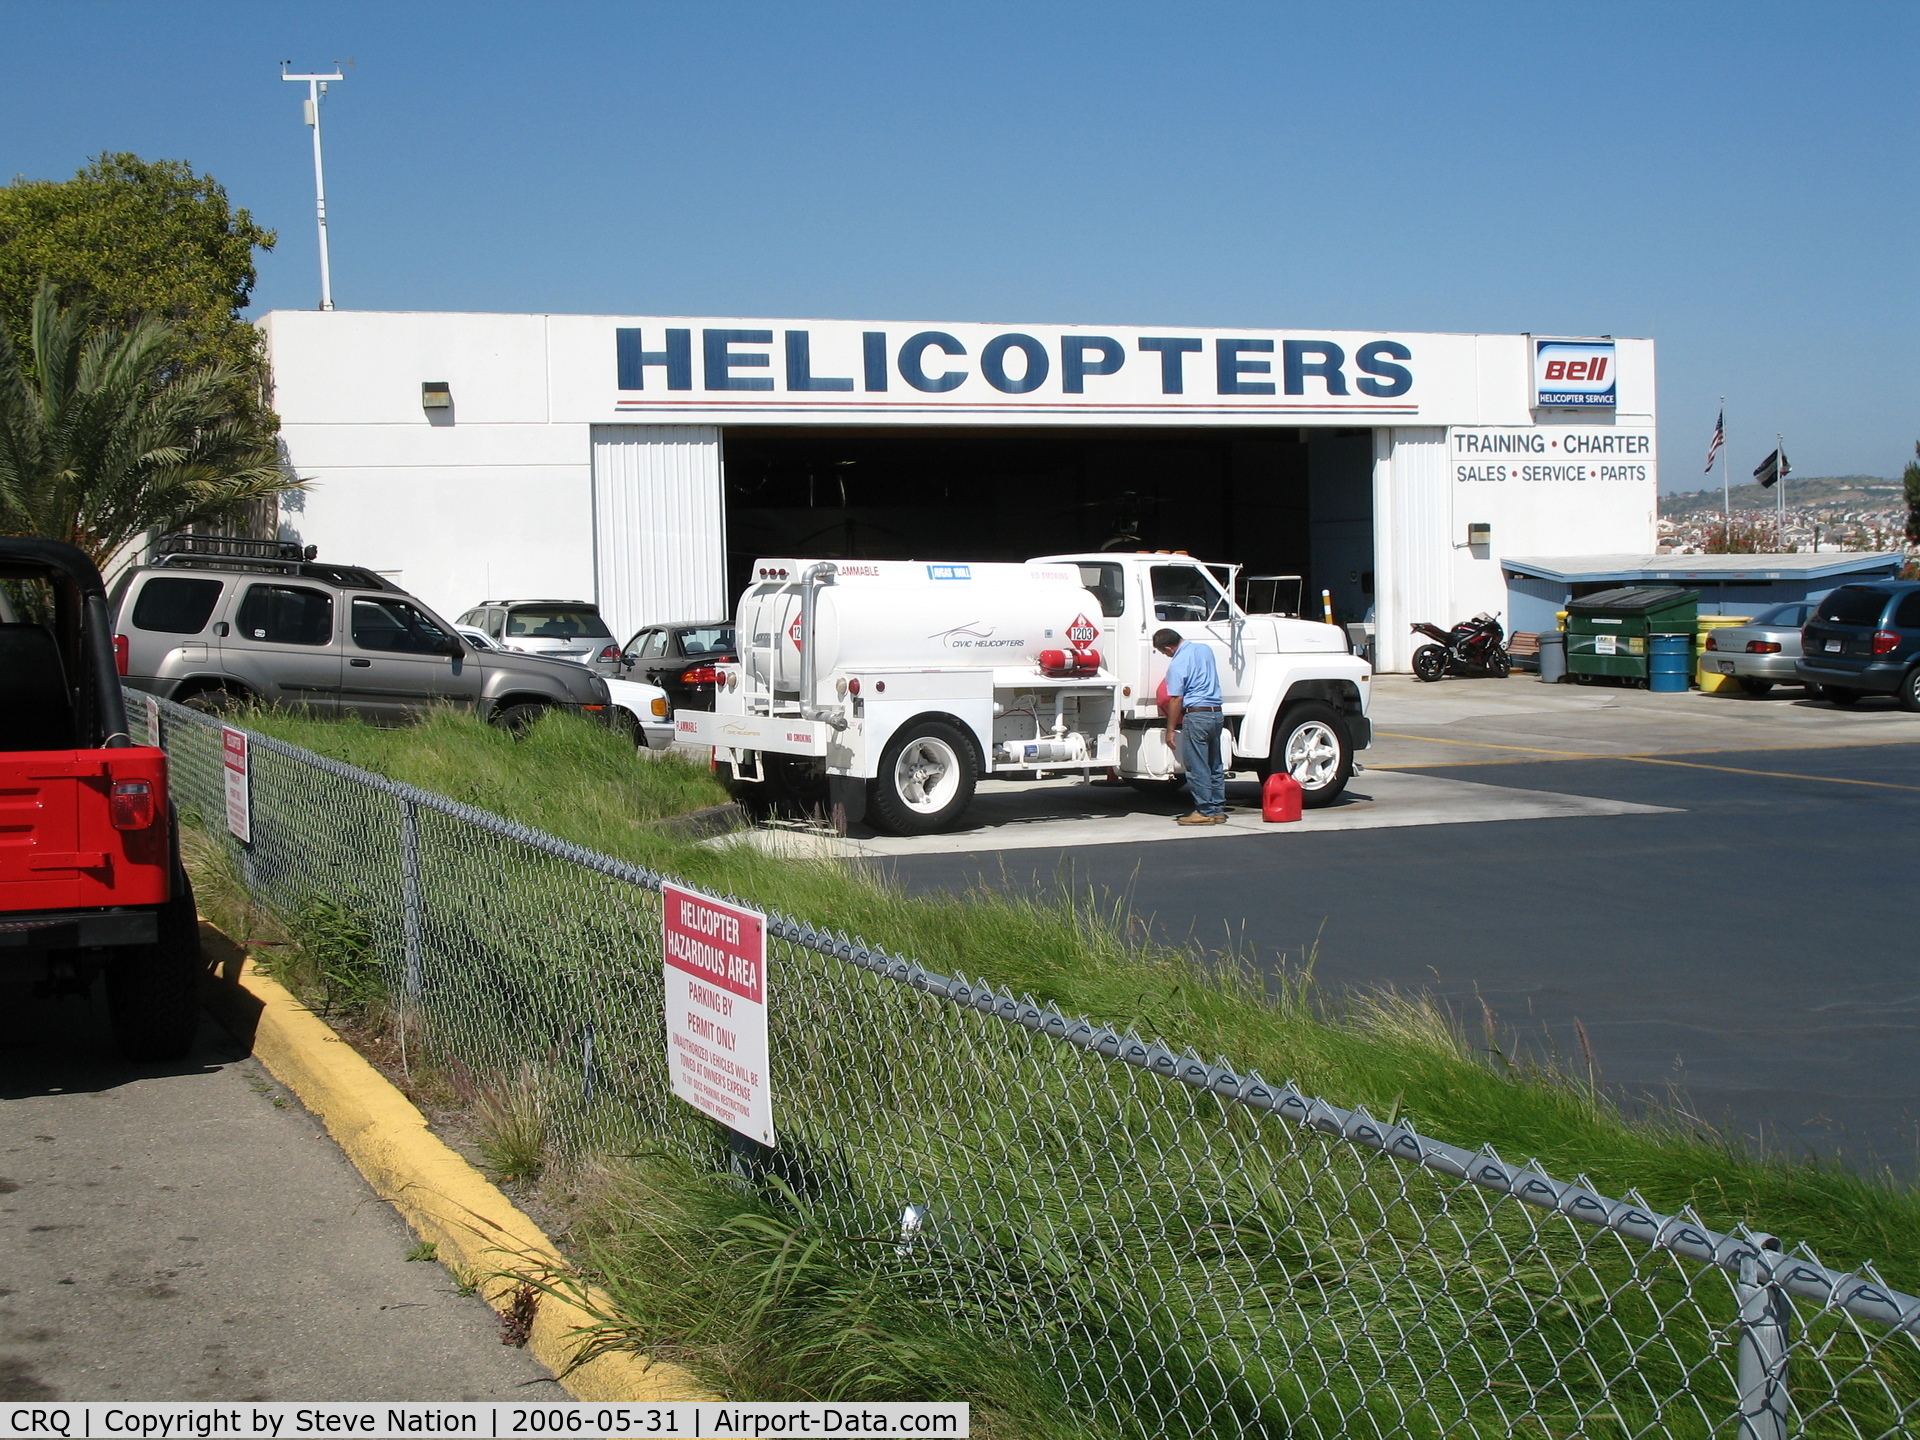 Mc Clellan-palomar Airport (CRQ) - Civic Helicopter training center hangar @ McClellan-Palomar Airport, CA